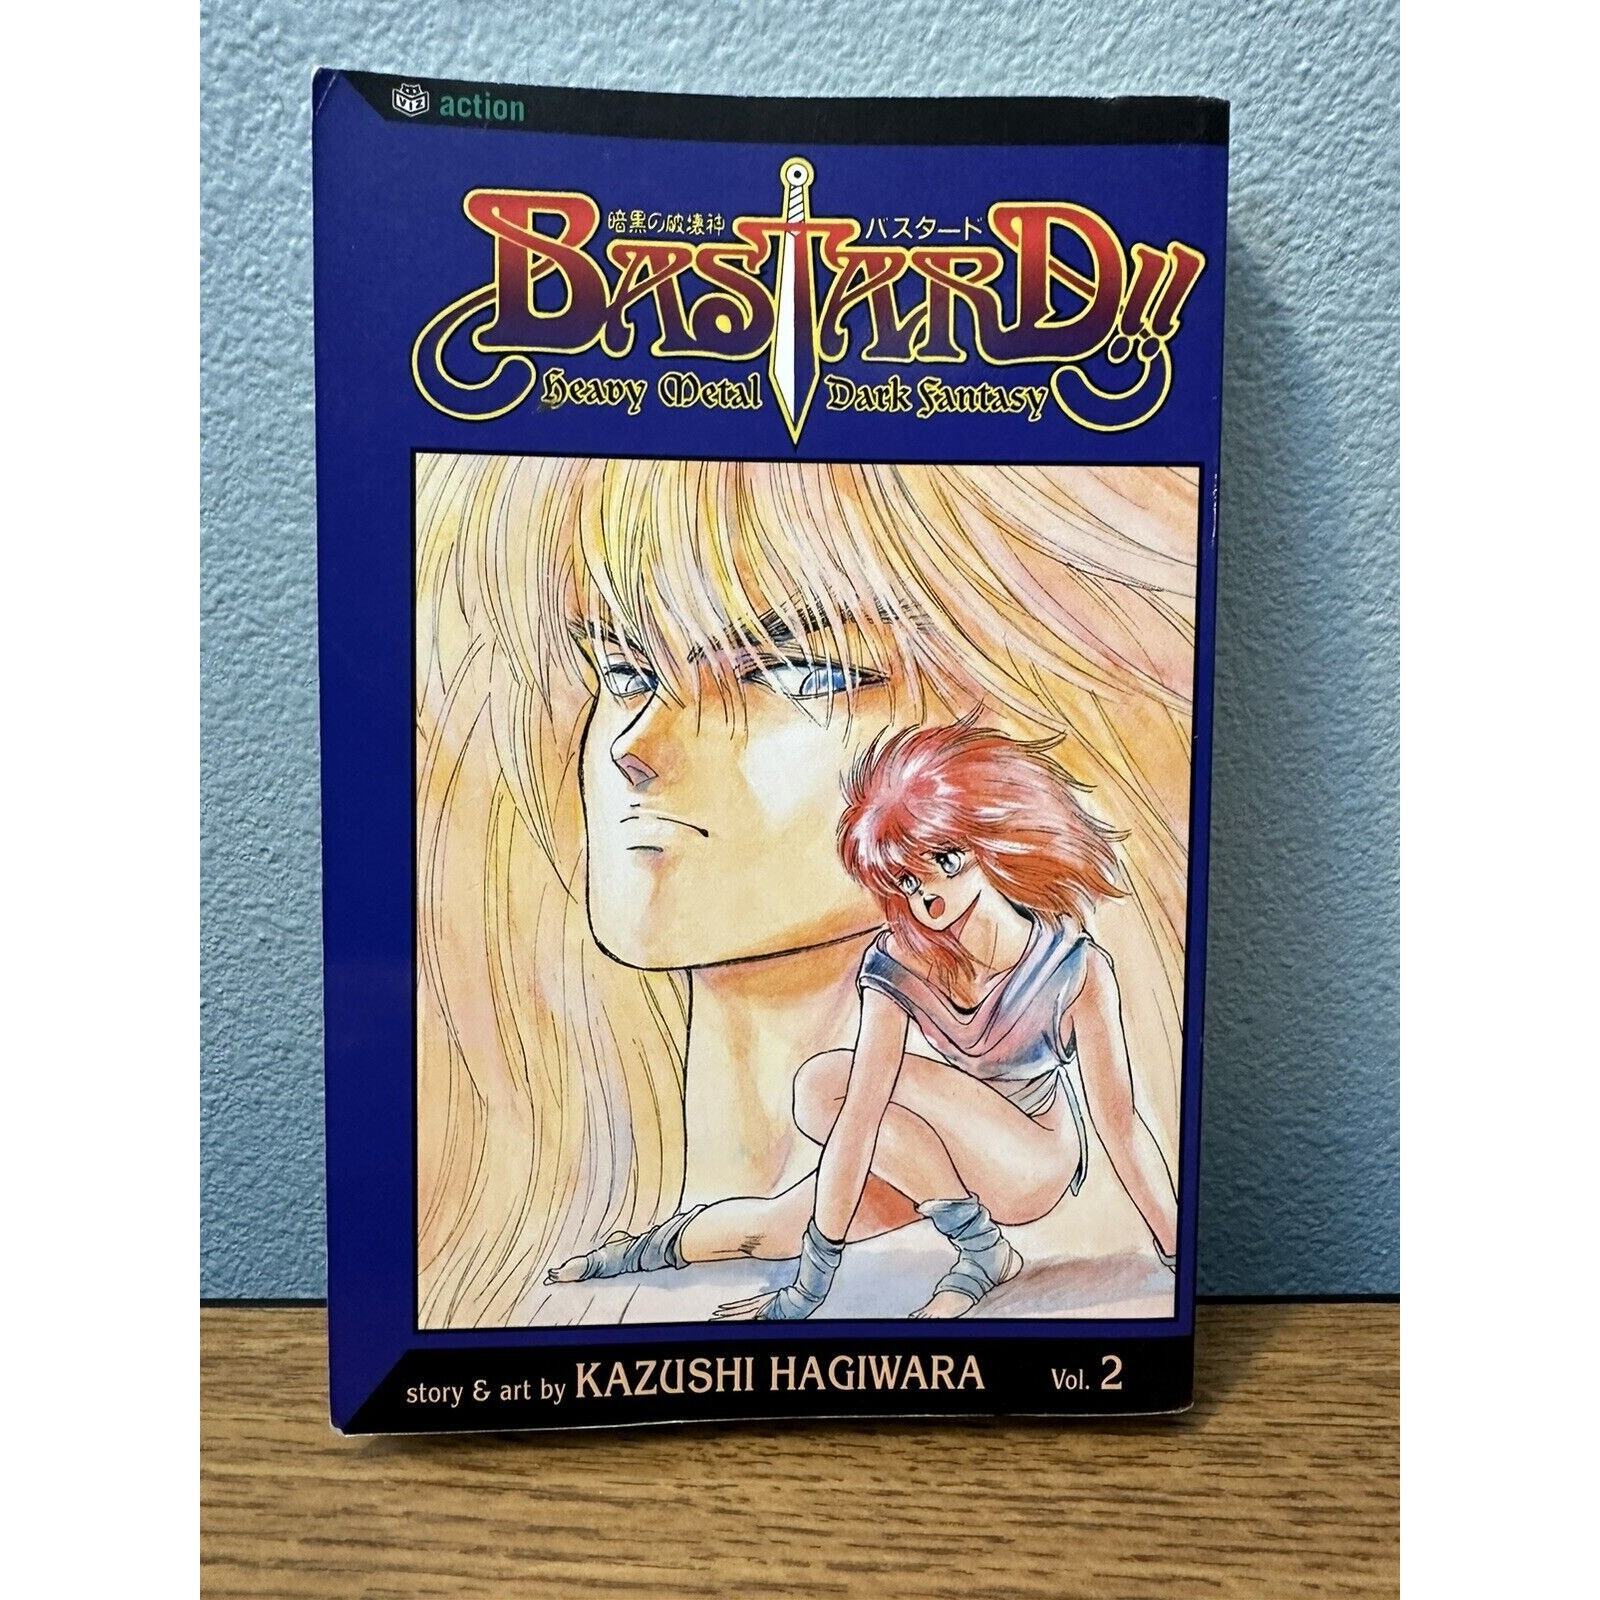 Bastard volume 2 by Kazushi Hagiwara (2003) rare oop AC Manga graphic novel